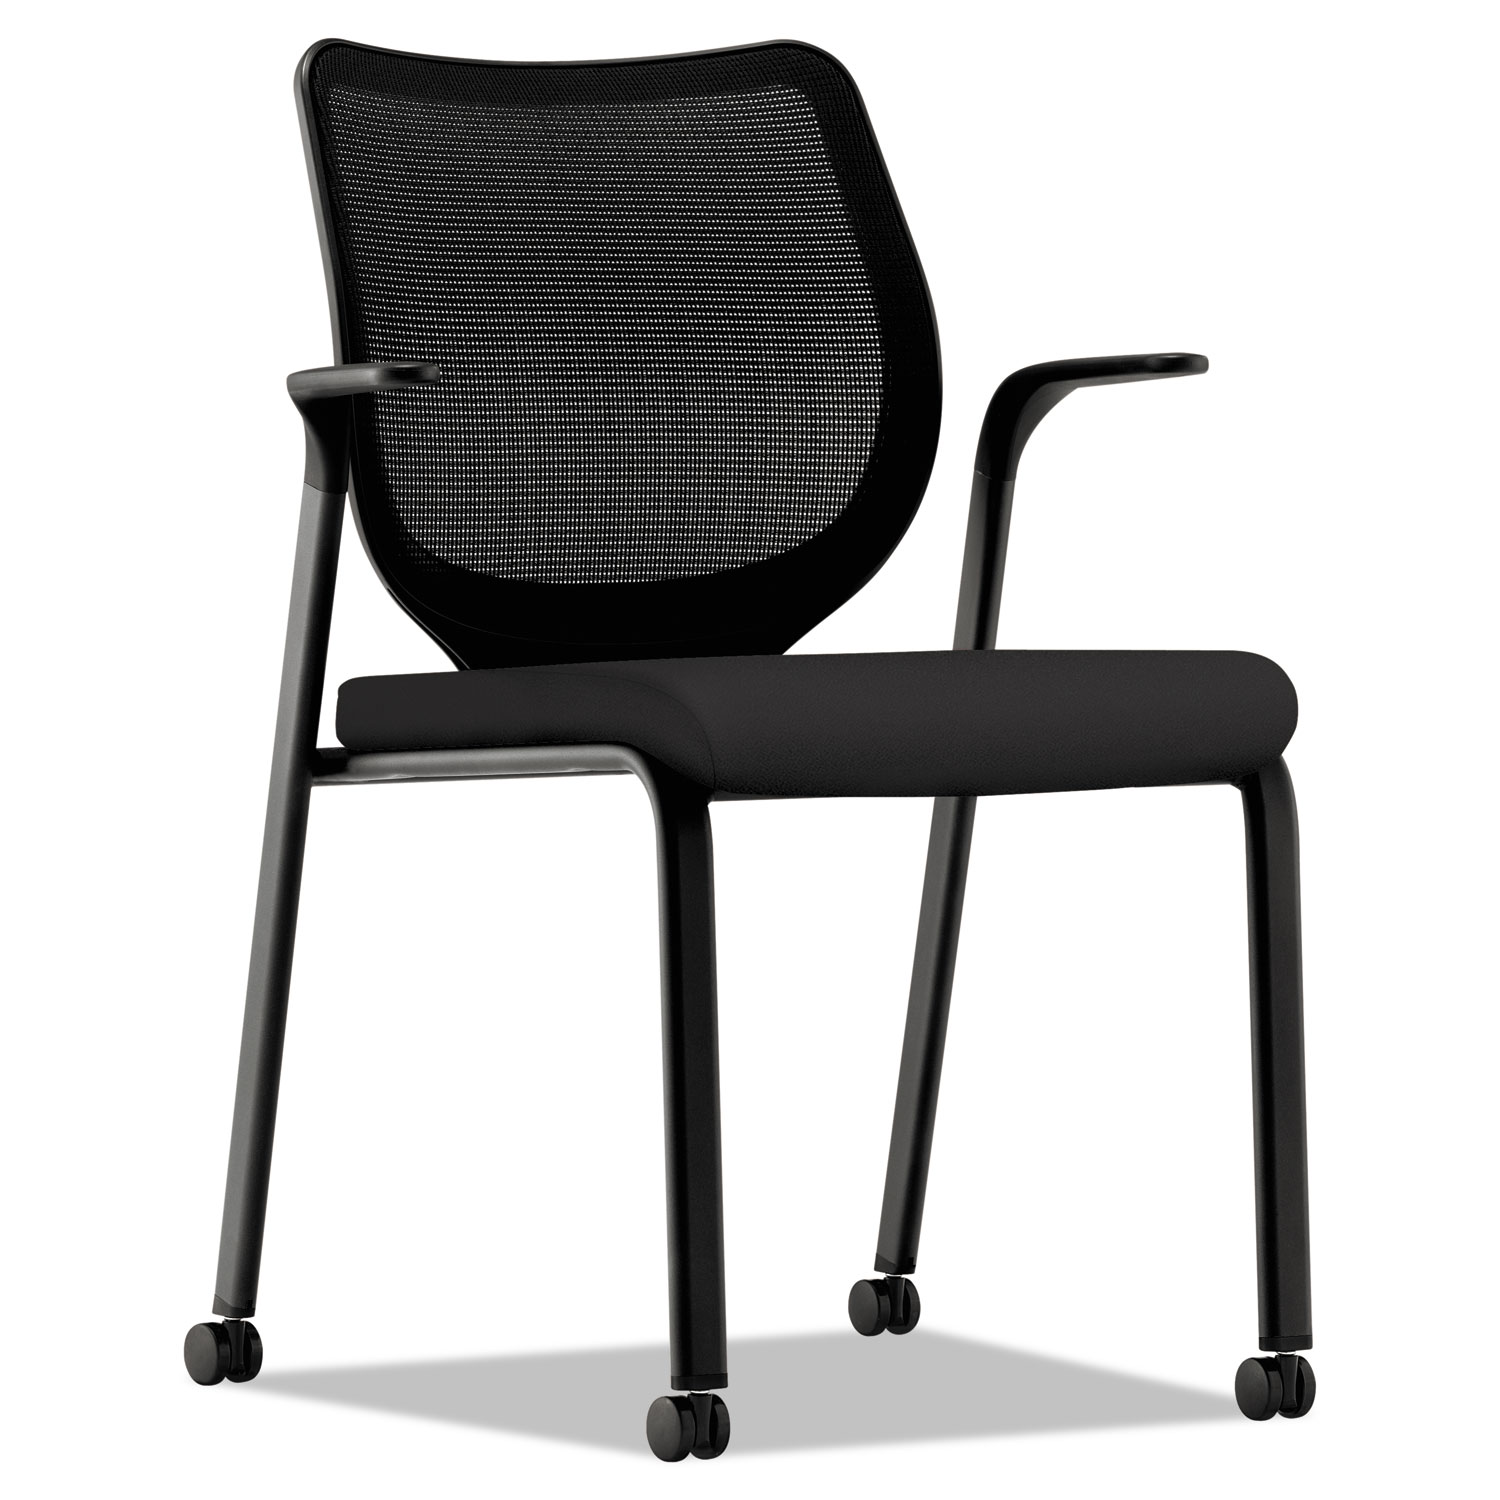 Nucleus Multipurpose Stacking Chair, ilira-Stretch M4 Back, Black Seat/Base